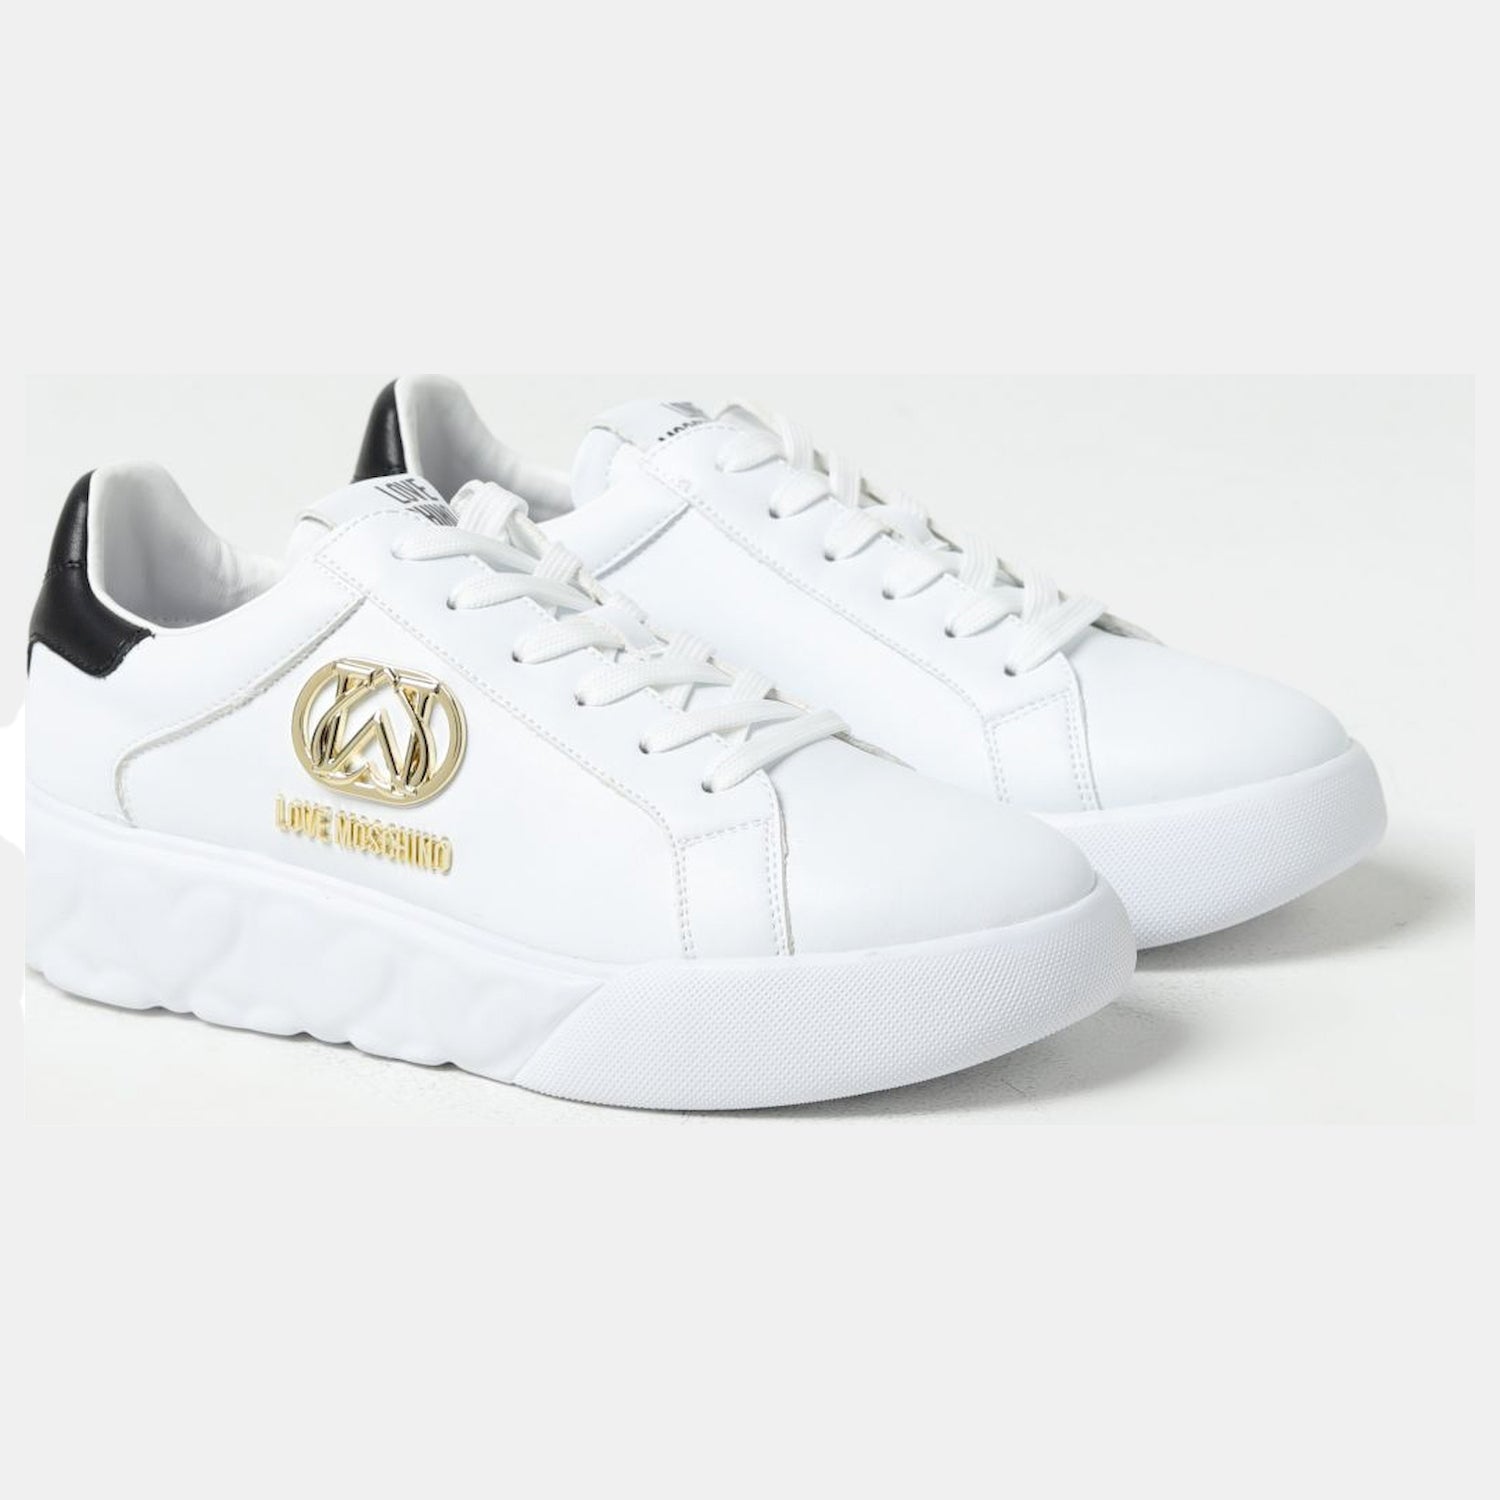 Moschino Sapatilhas Sneakers Shoes Ja15914 white gold branco ouro2